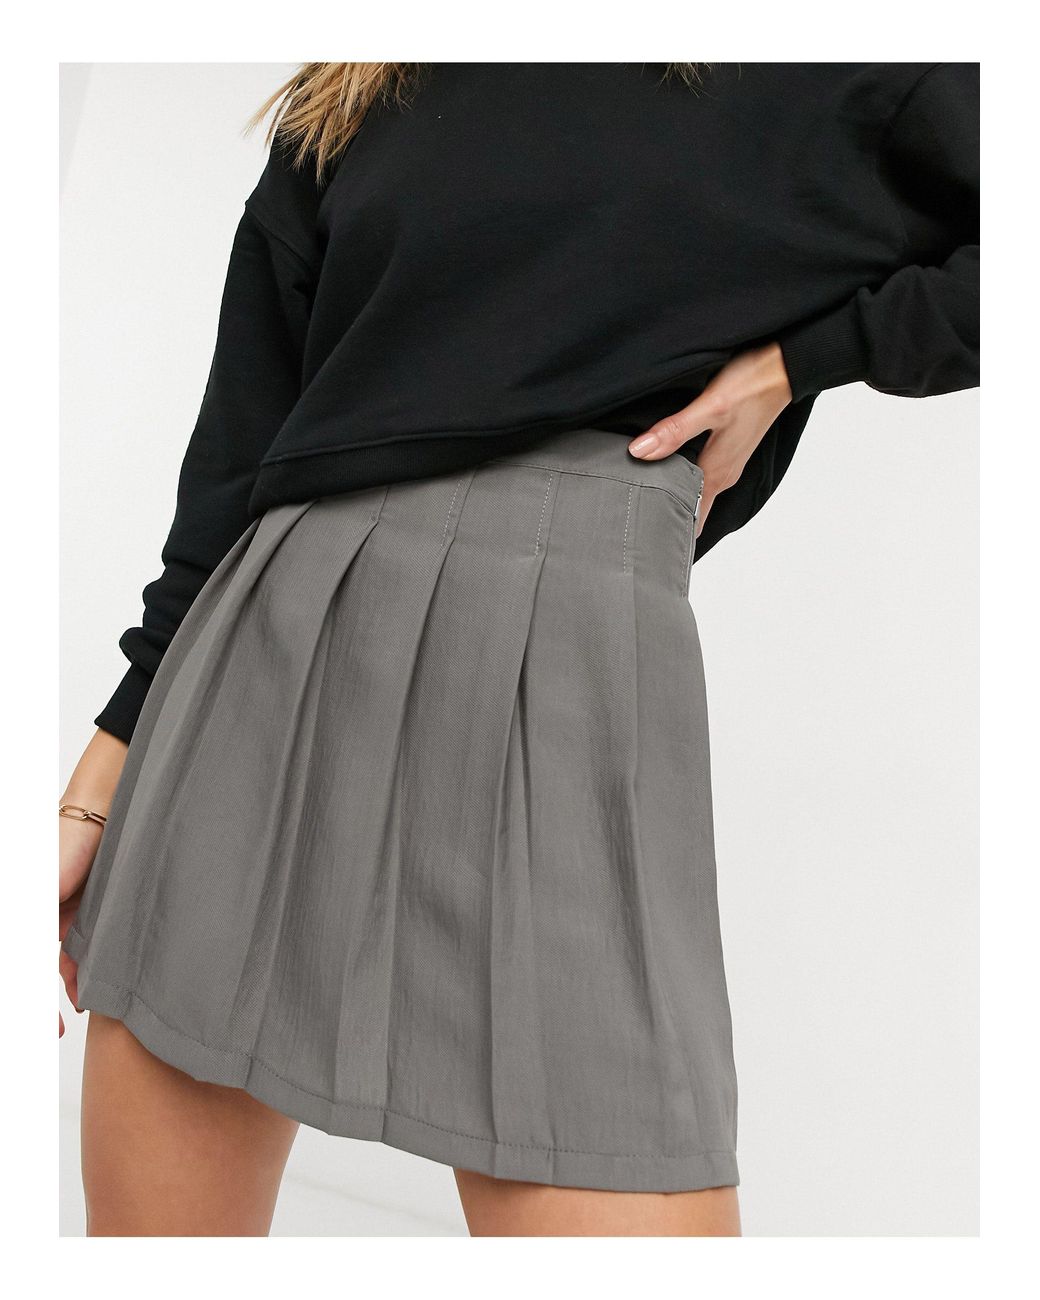 ASOS Mini Pleated Tennis Skirt in Grey (Gray) - Lyst